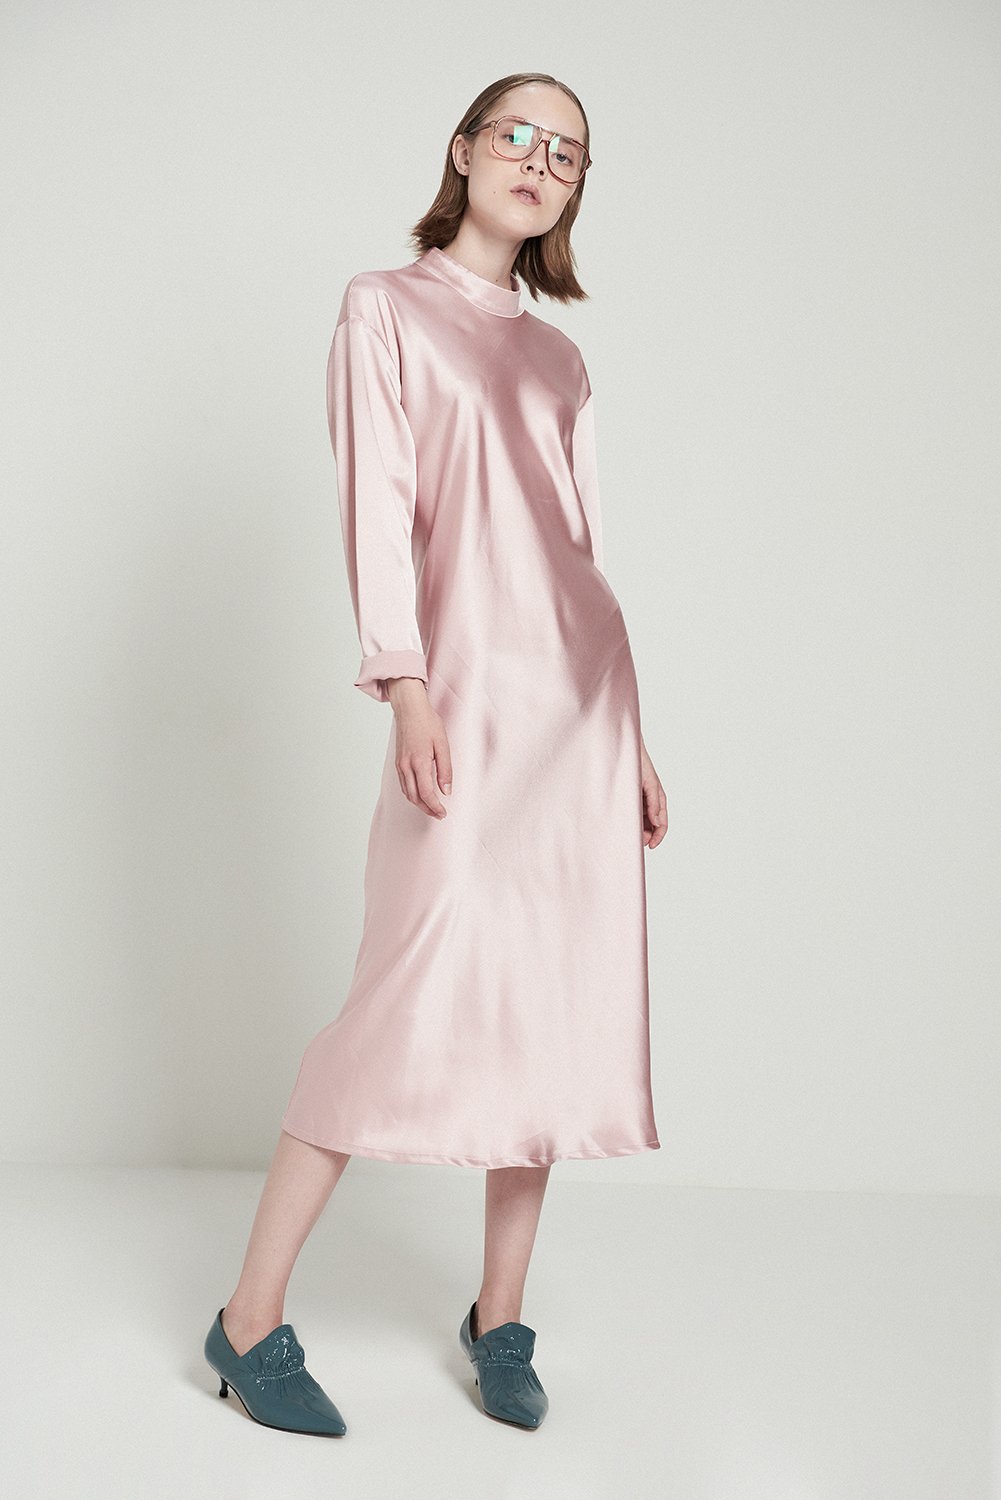 Shiny Turtleneck A-line Dress-Pink, $95